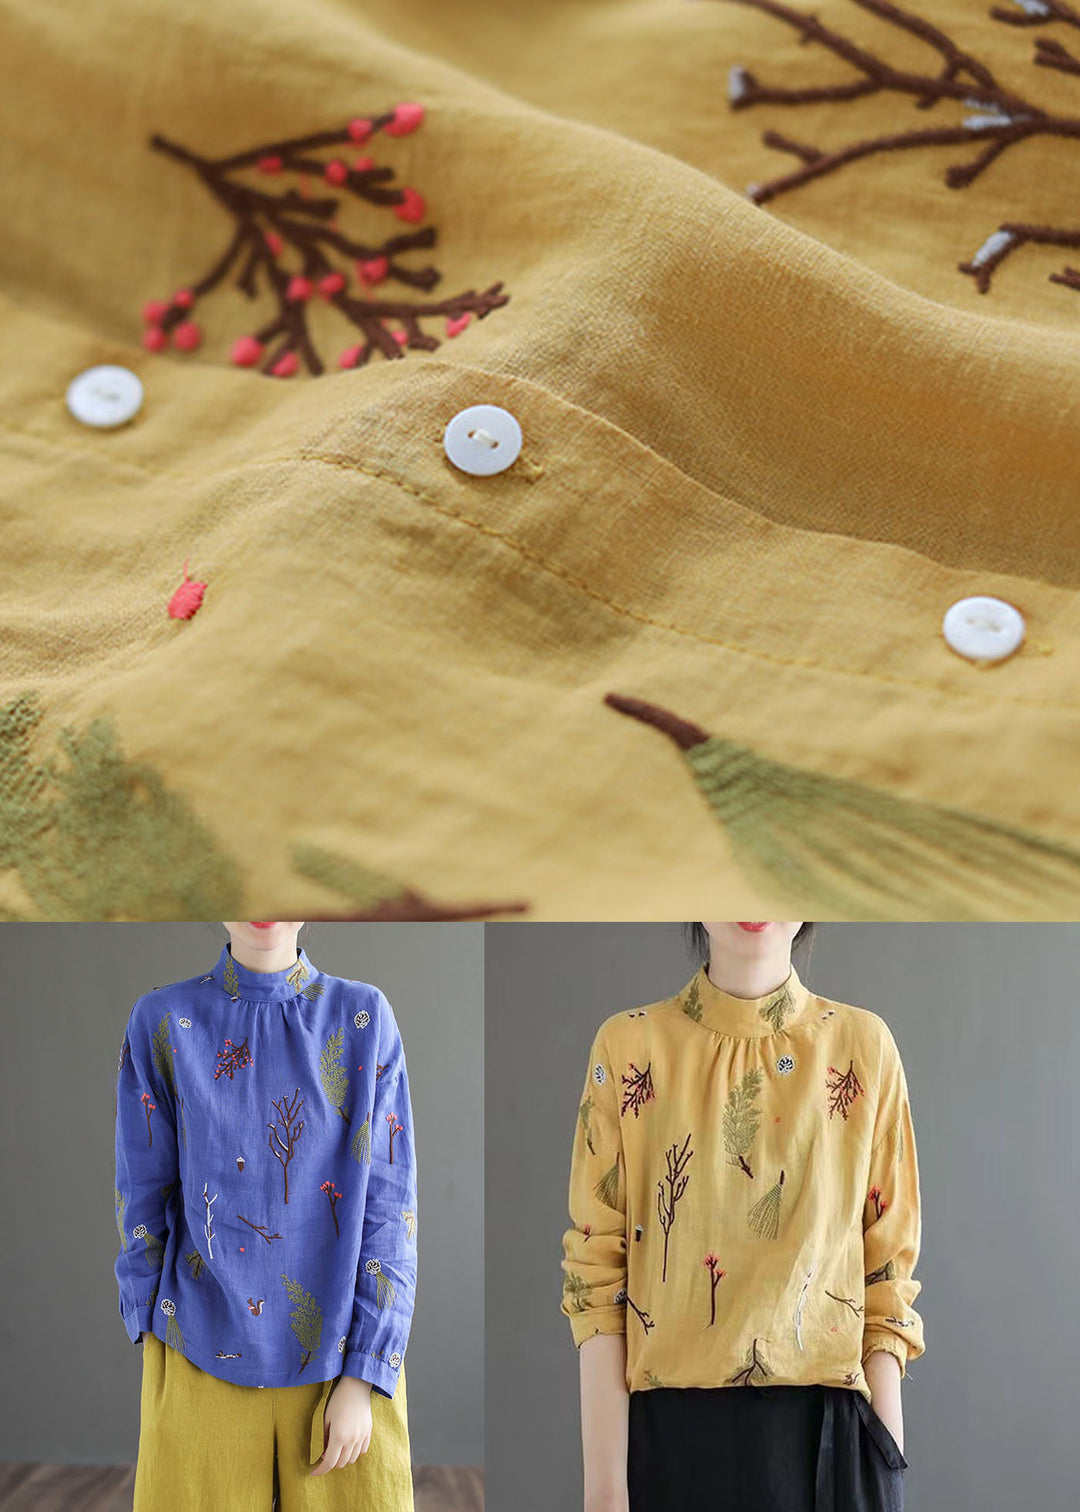 Blue Patchwork Linen Shirt Tops Embroideried Stand Collar Long Sleeve